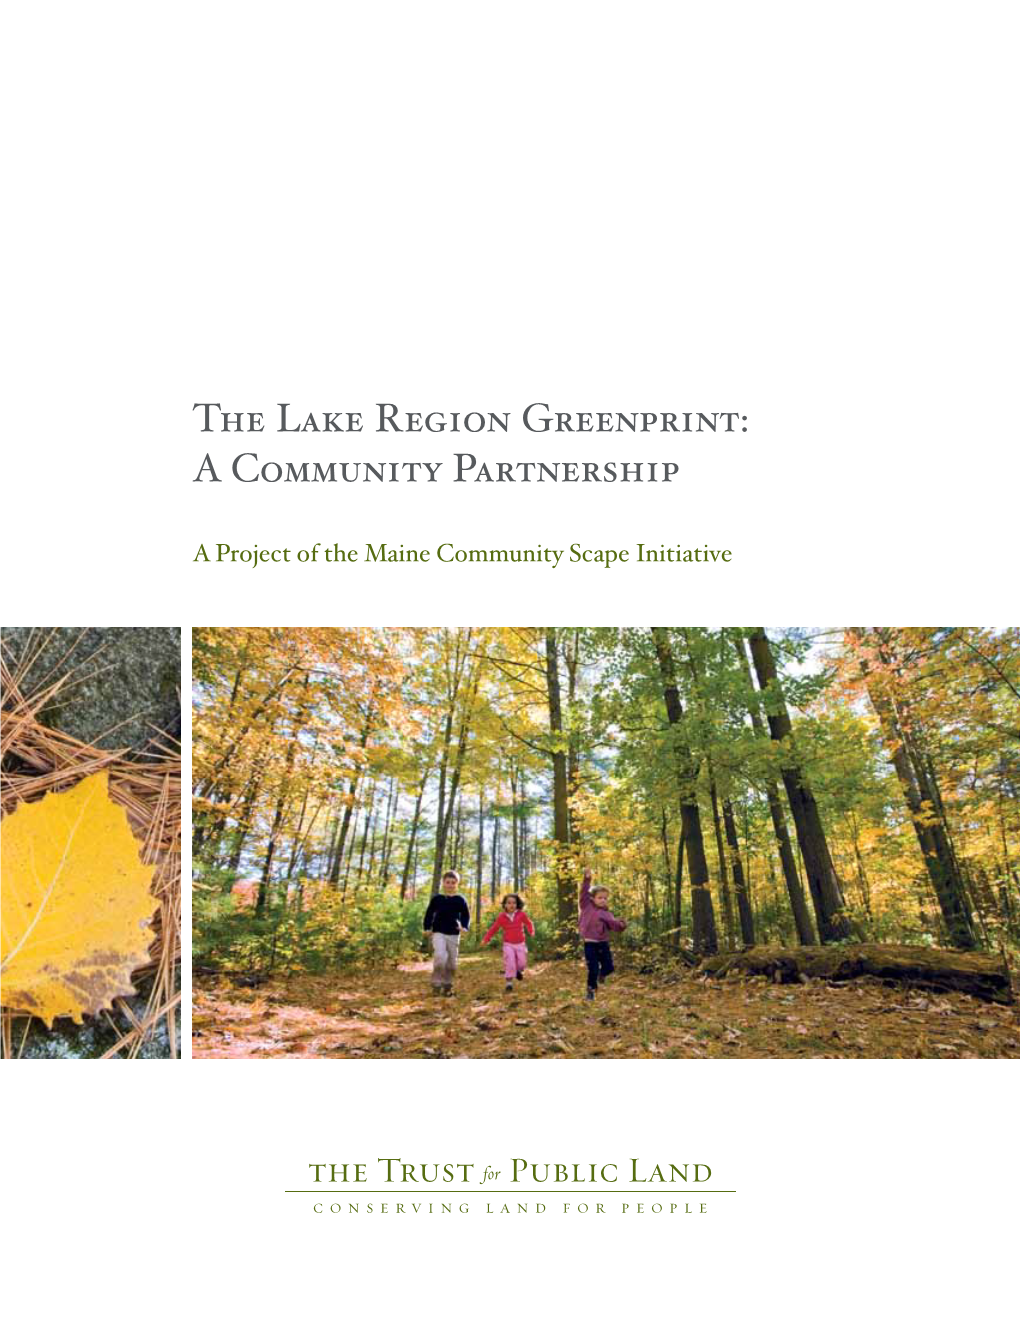 The Lake Region Greenprint: a Community Partnership